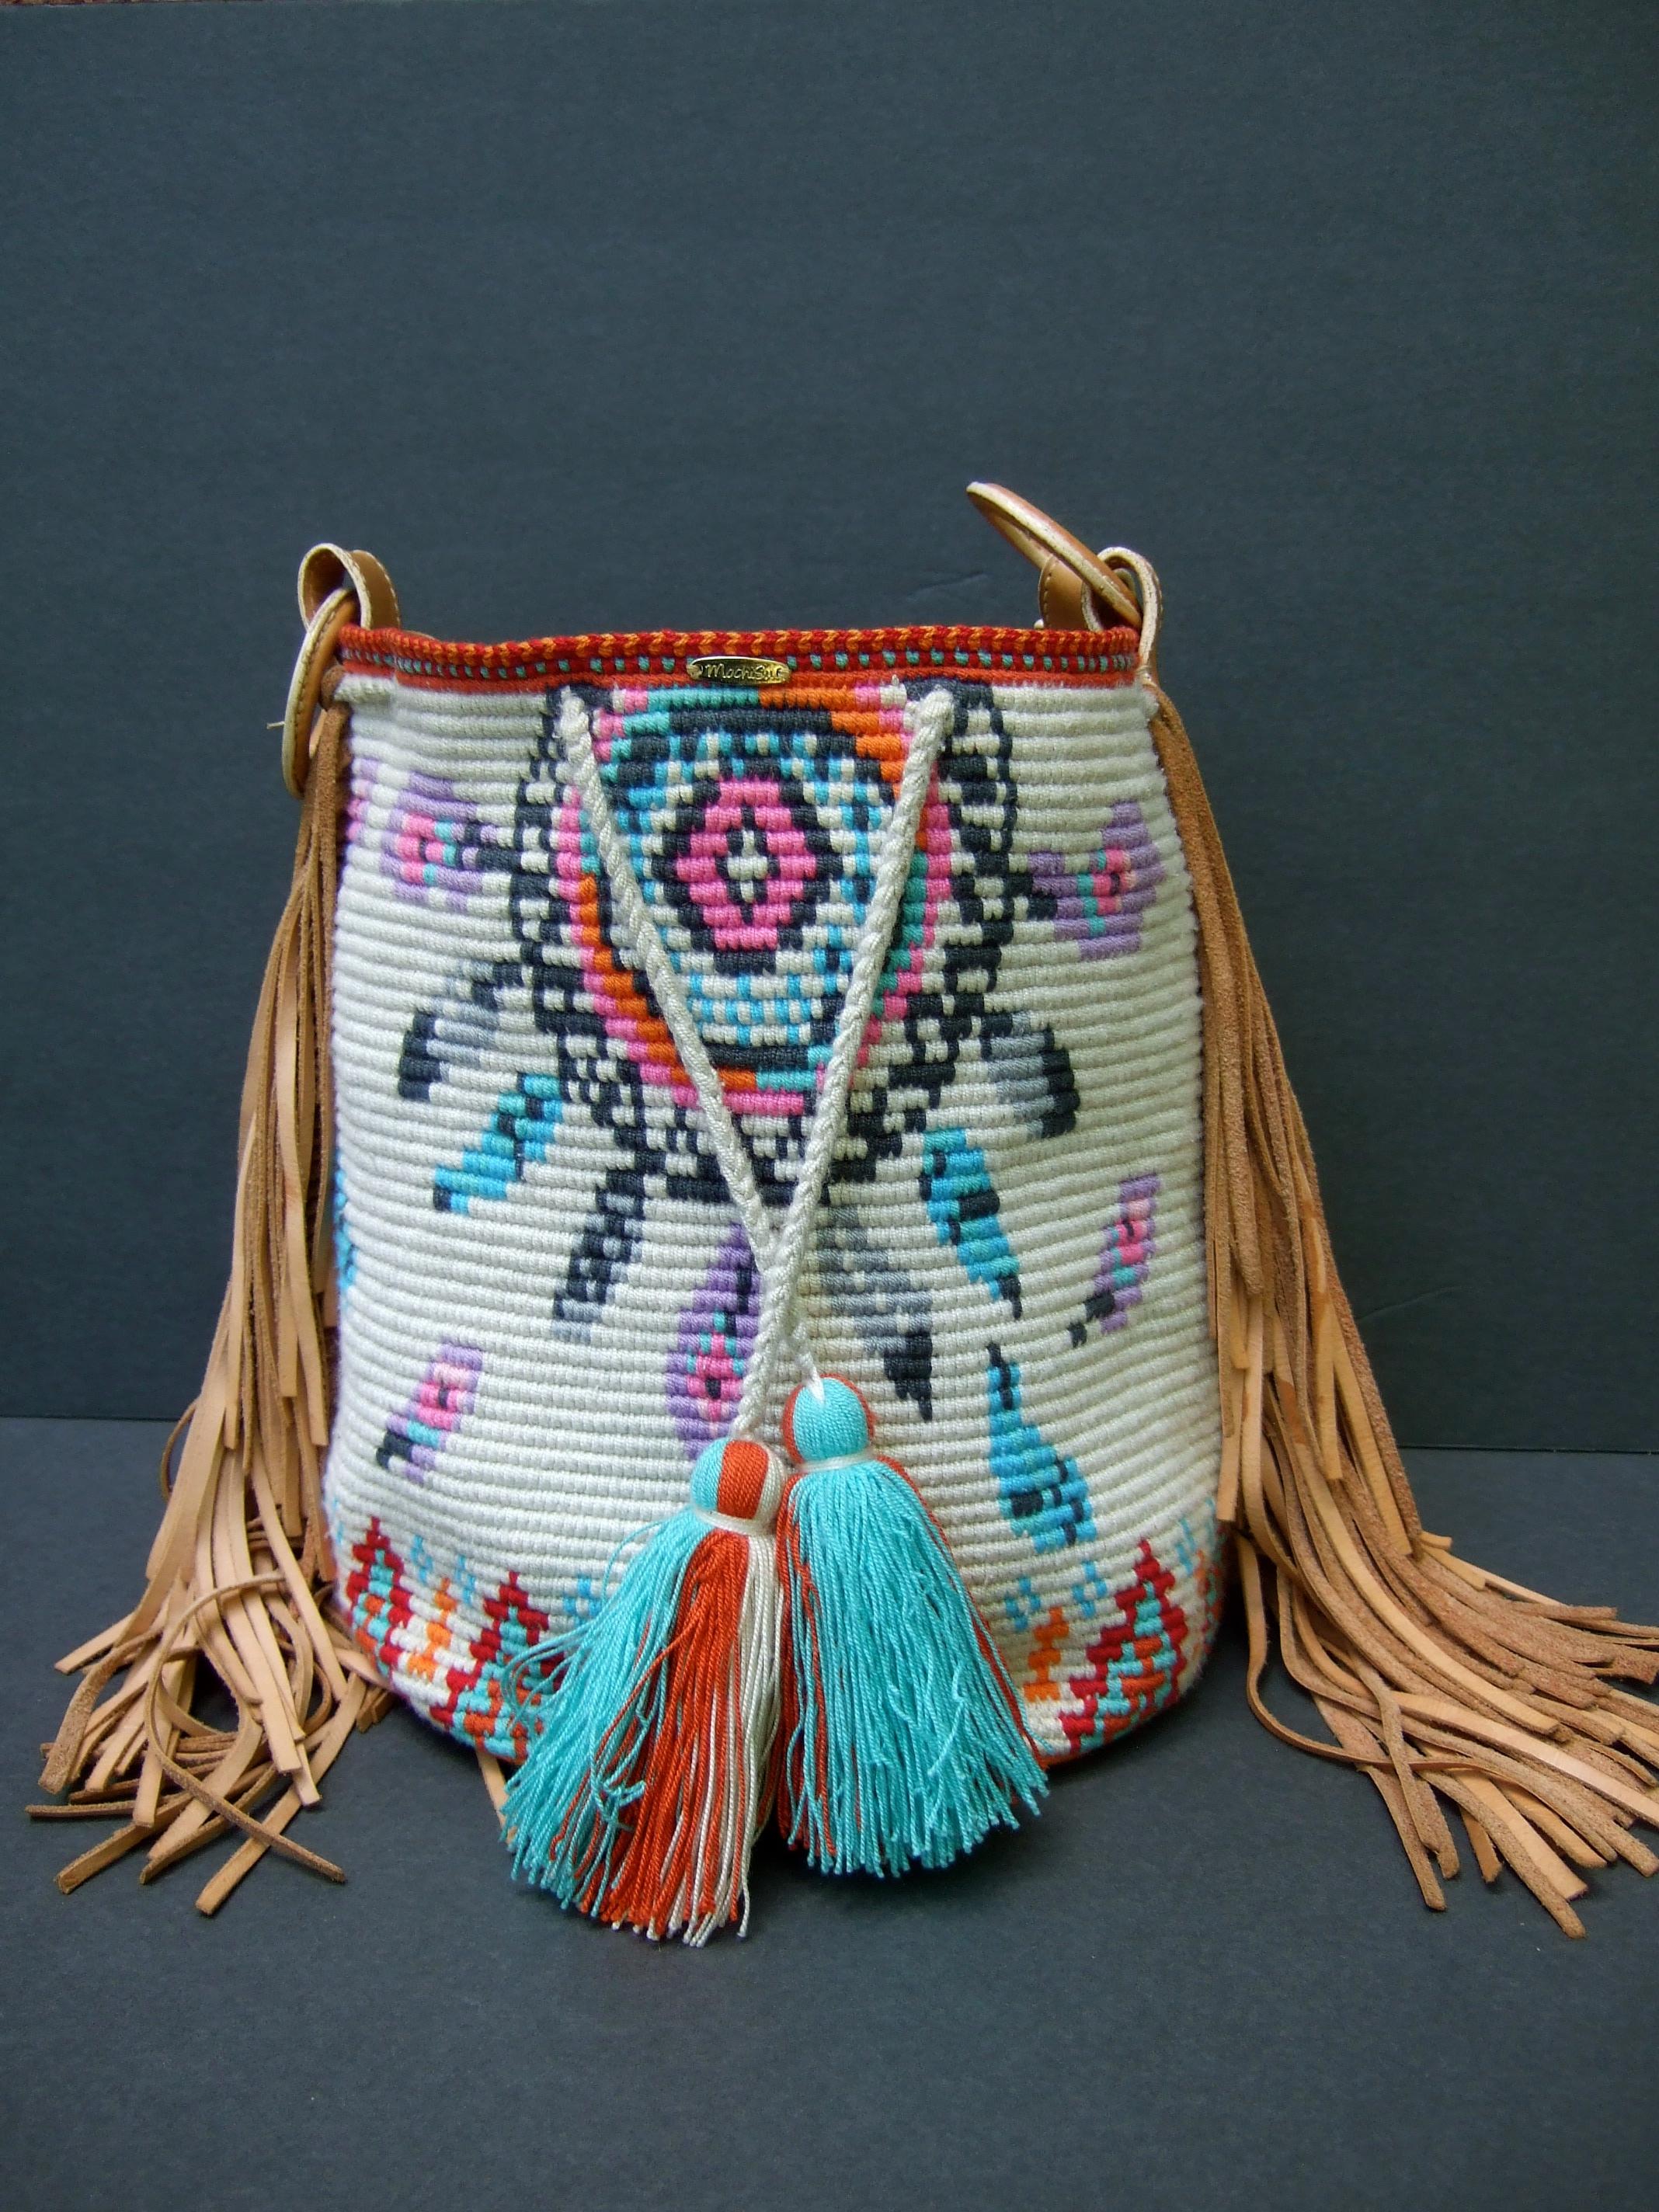  Handmade Woven Wool Knit Artisan Bucket Shoulder Bag c 1990s For Sale 6